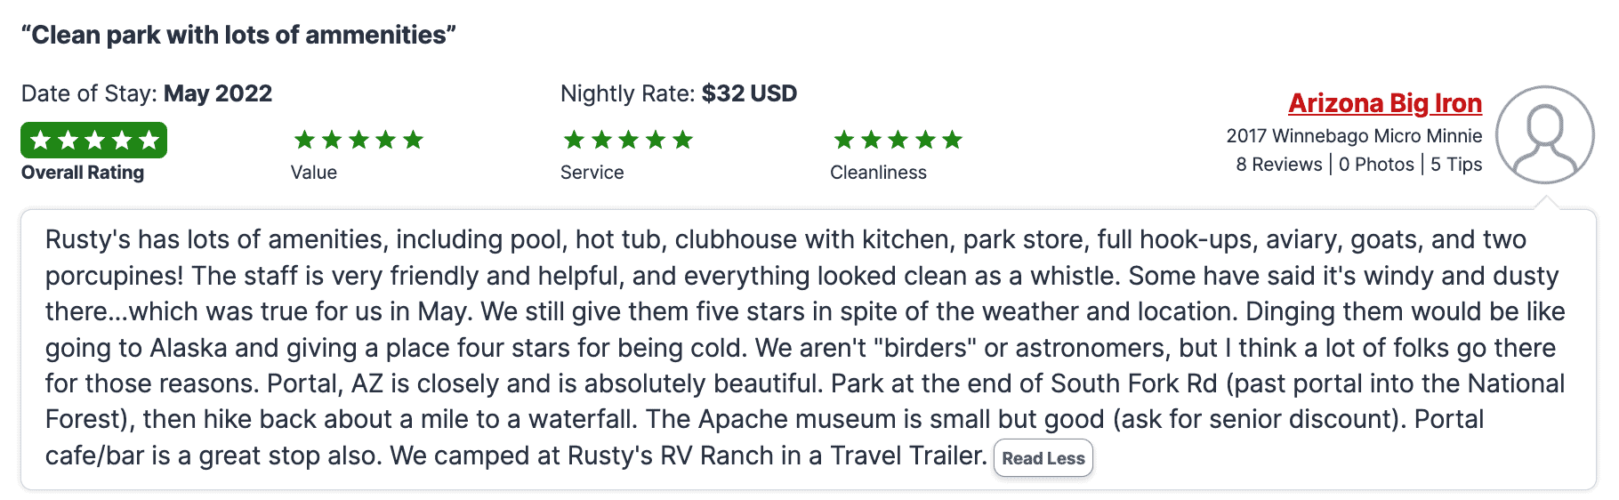 Review of Rusty's RV Ranch snowbird destination